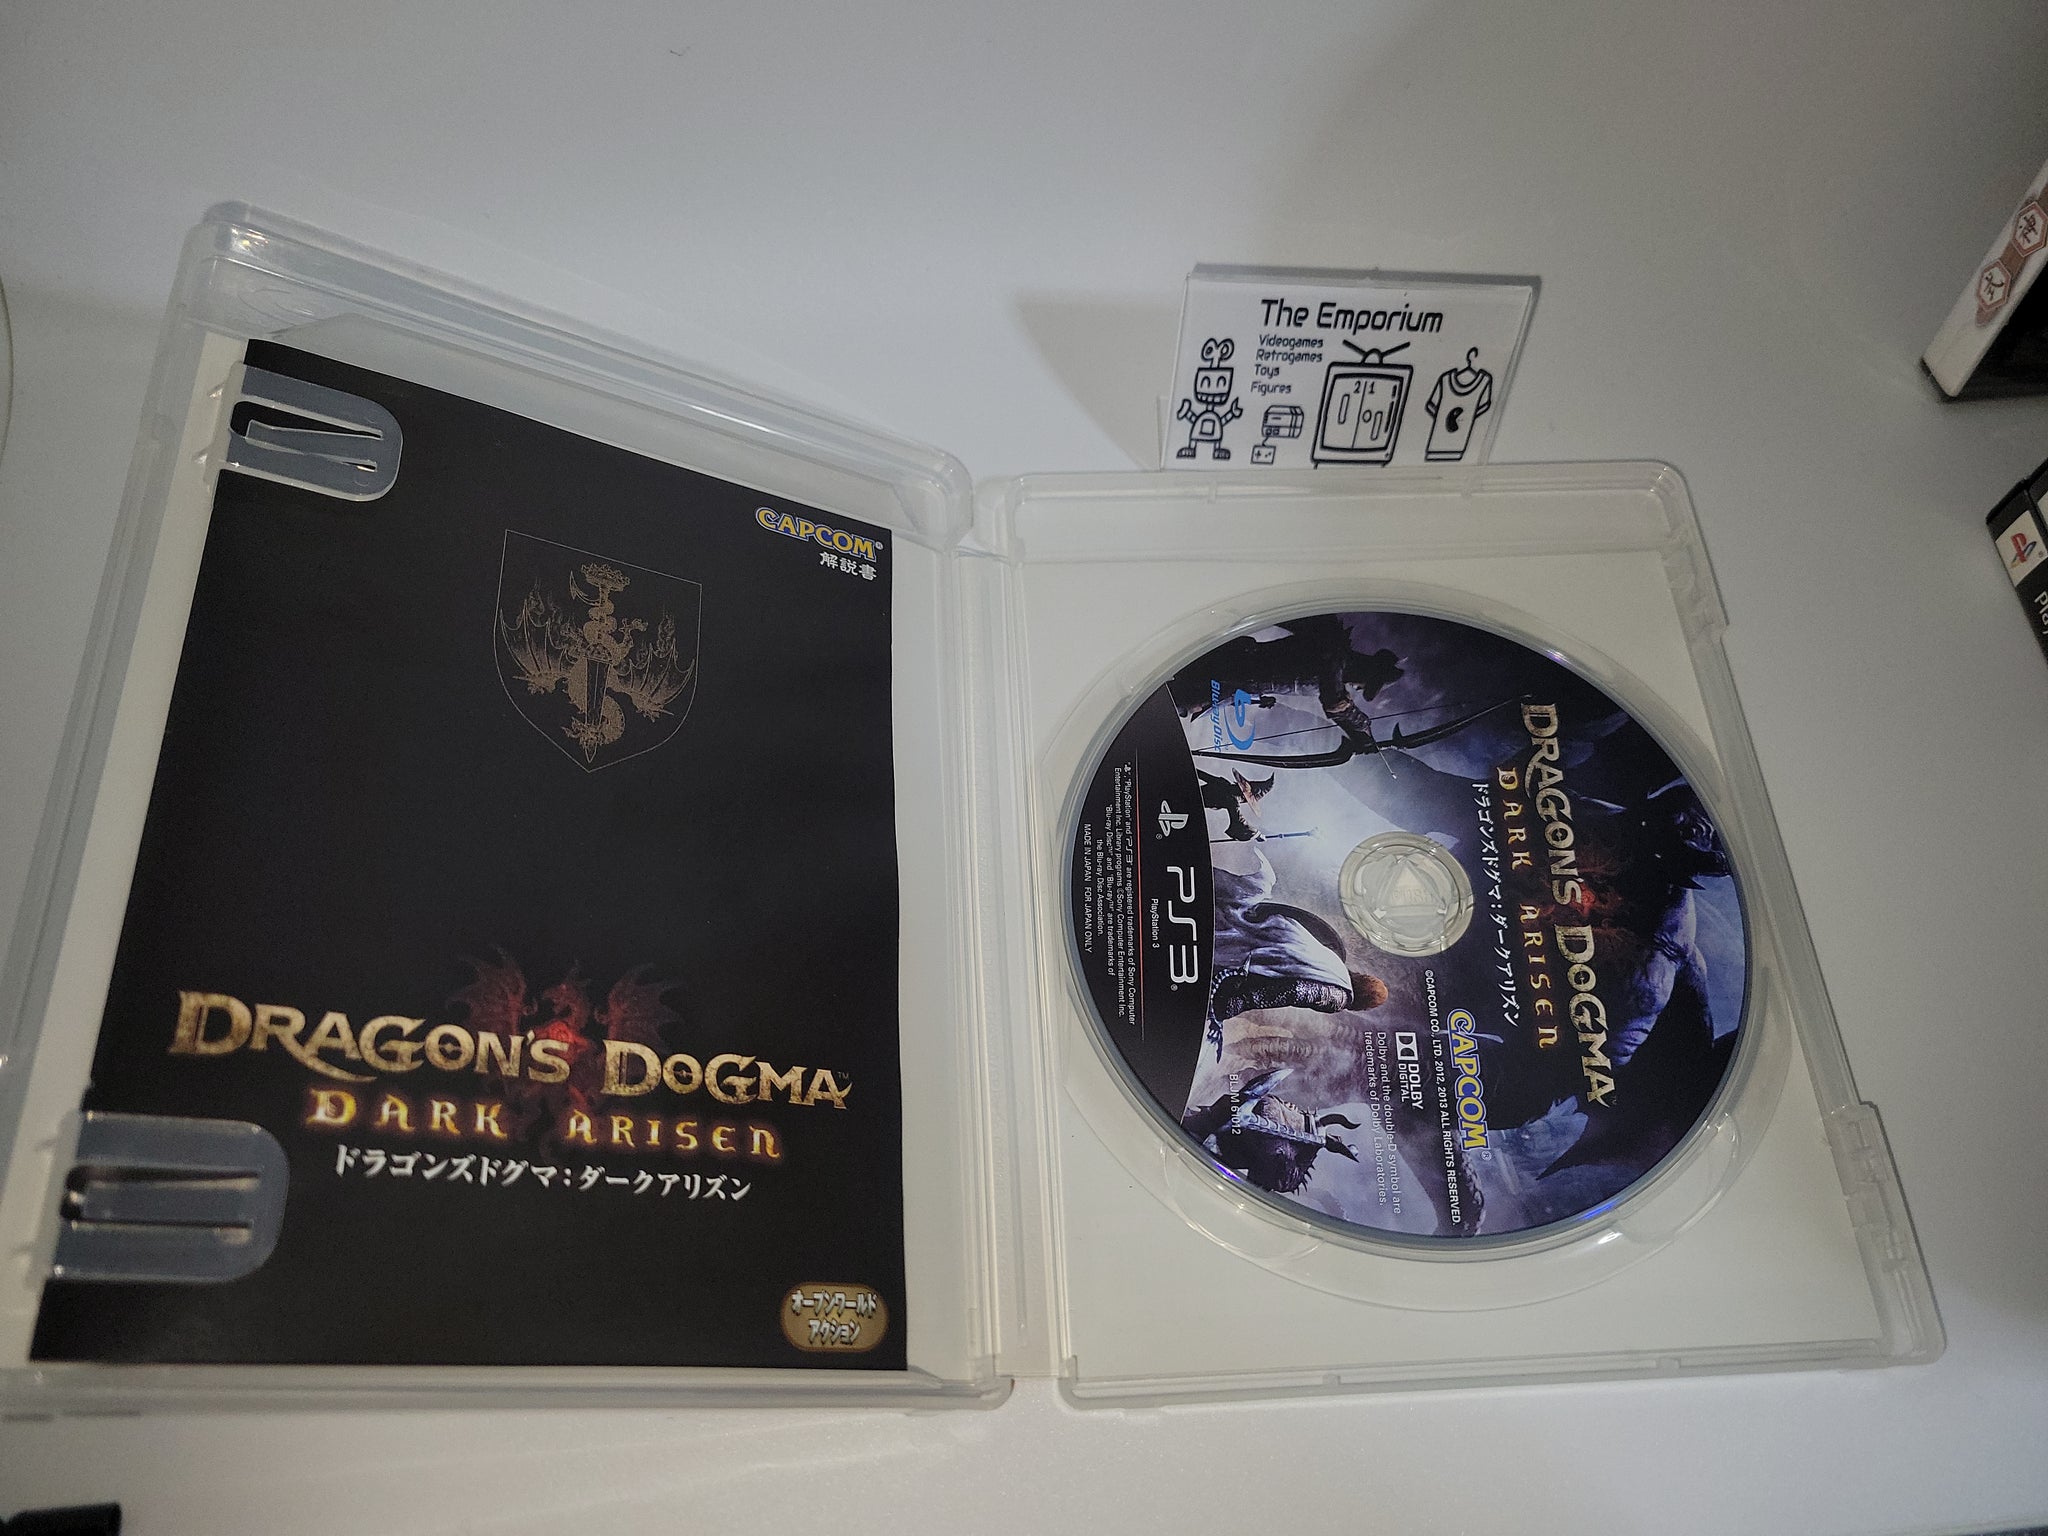 Dragon's Dogma: Dark Arisen - PlayStation 3, PlayStation 3